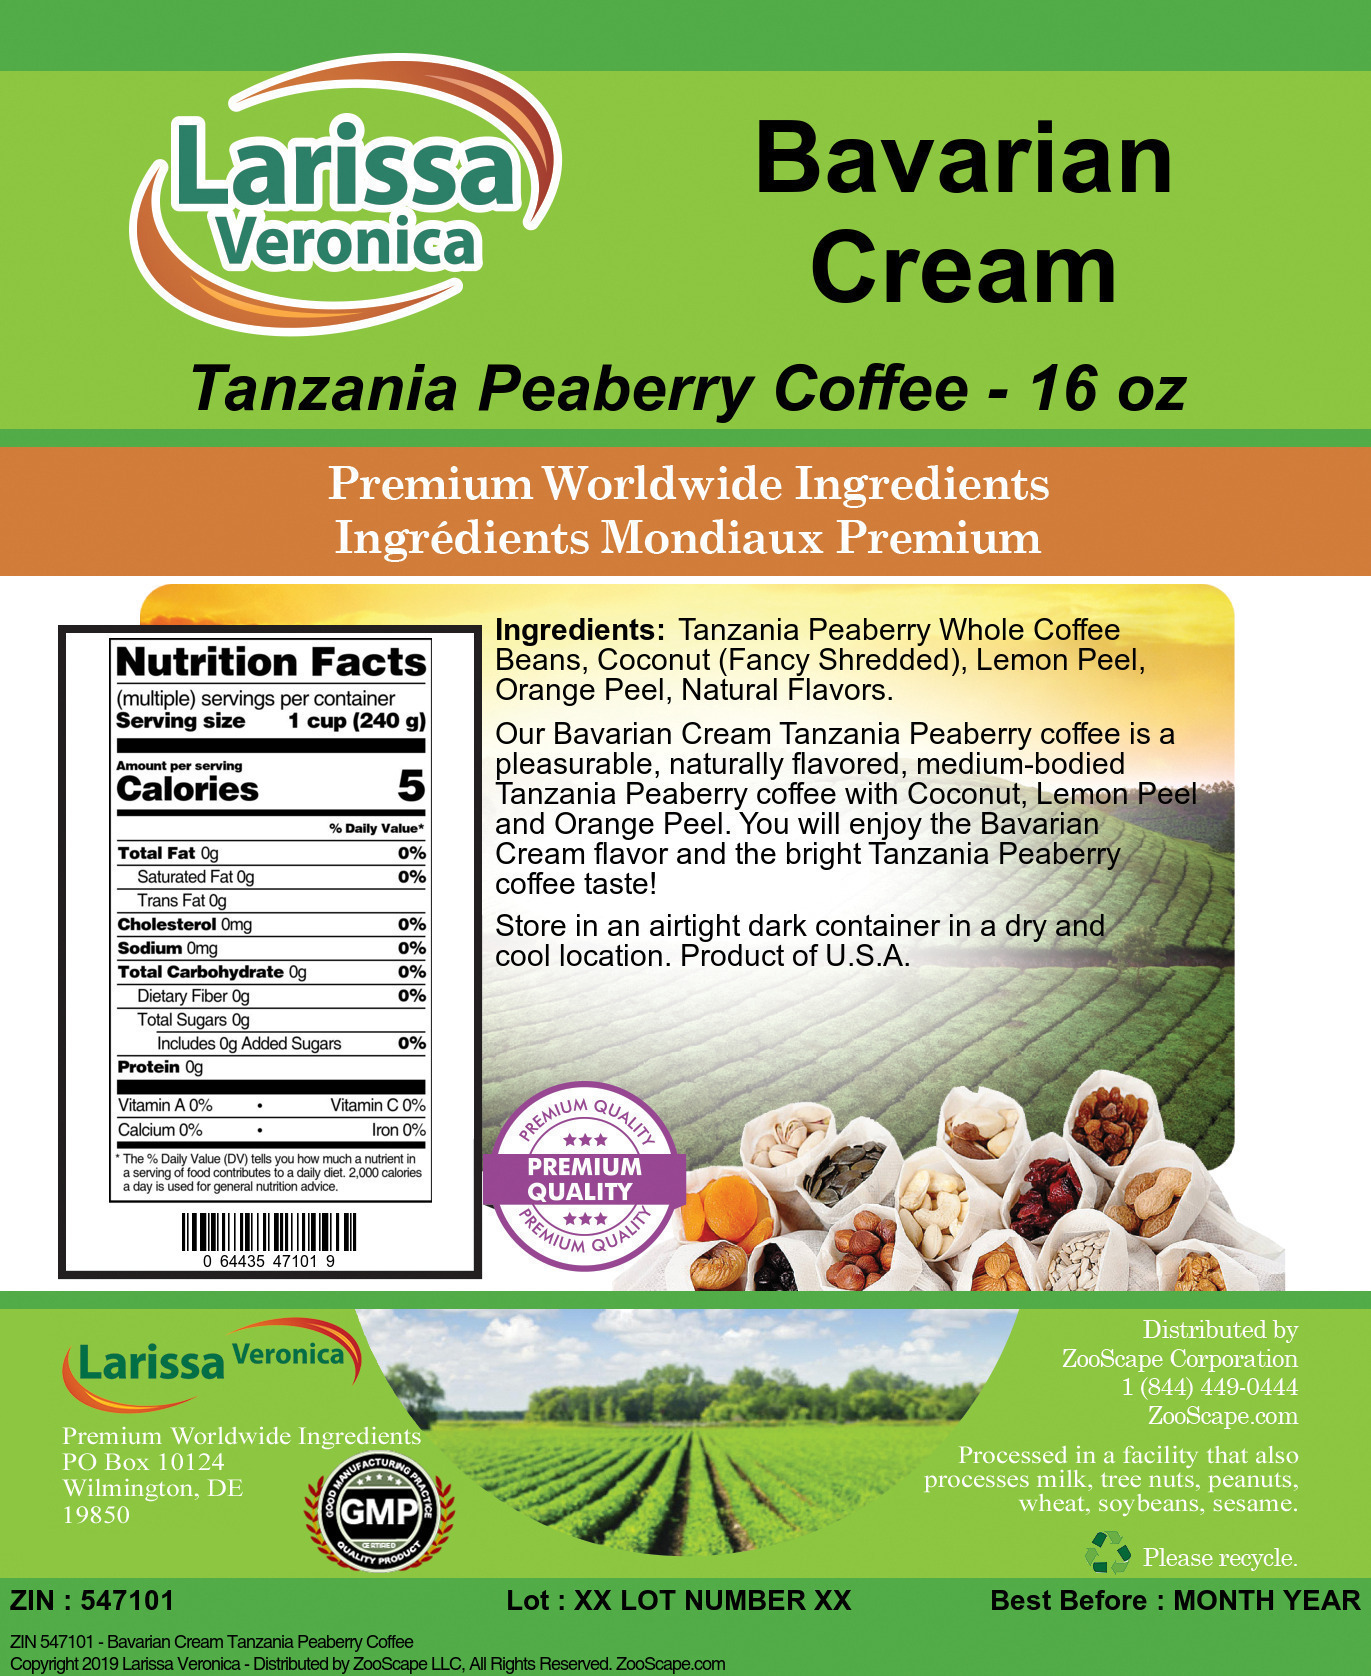 Bavarian Cream Tanzania Peaberry Coffee - Label